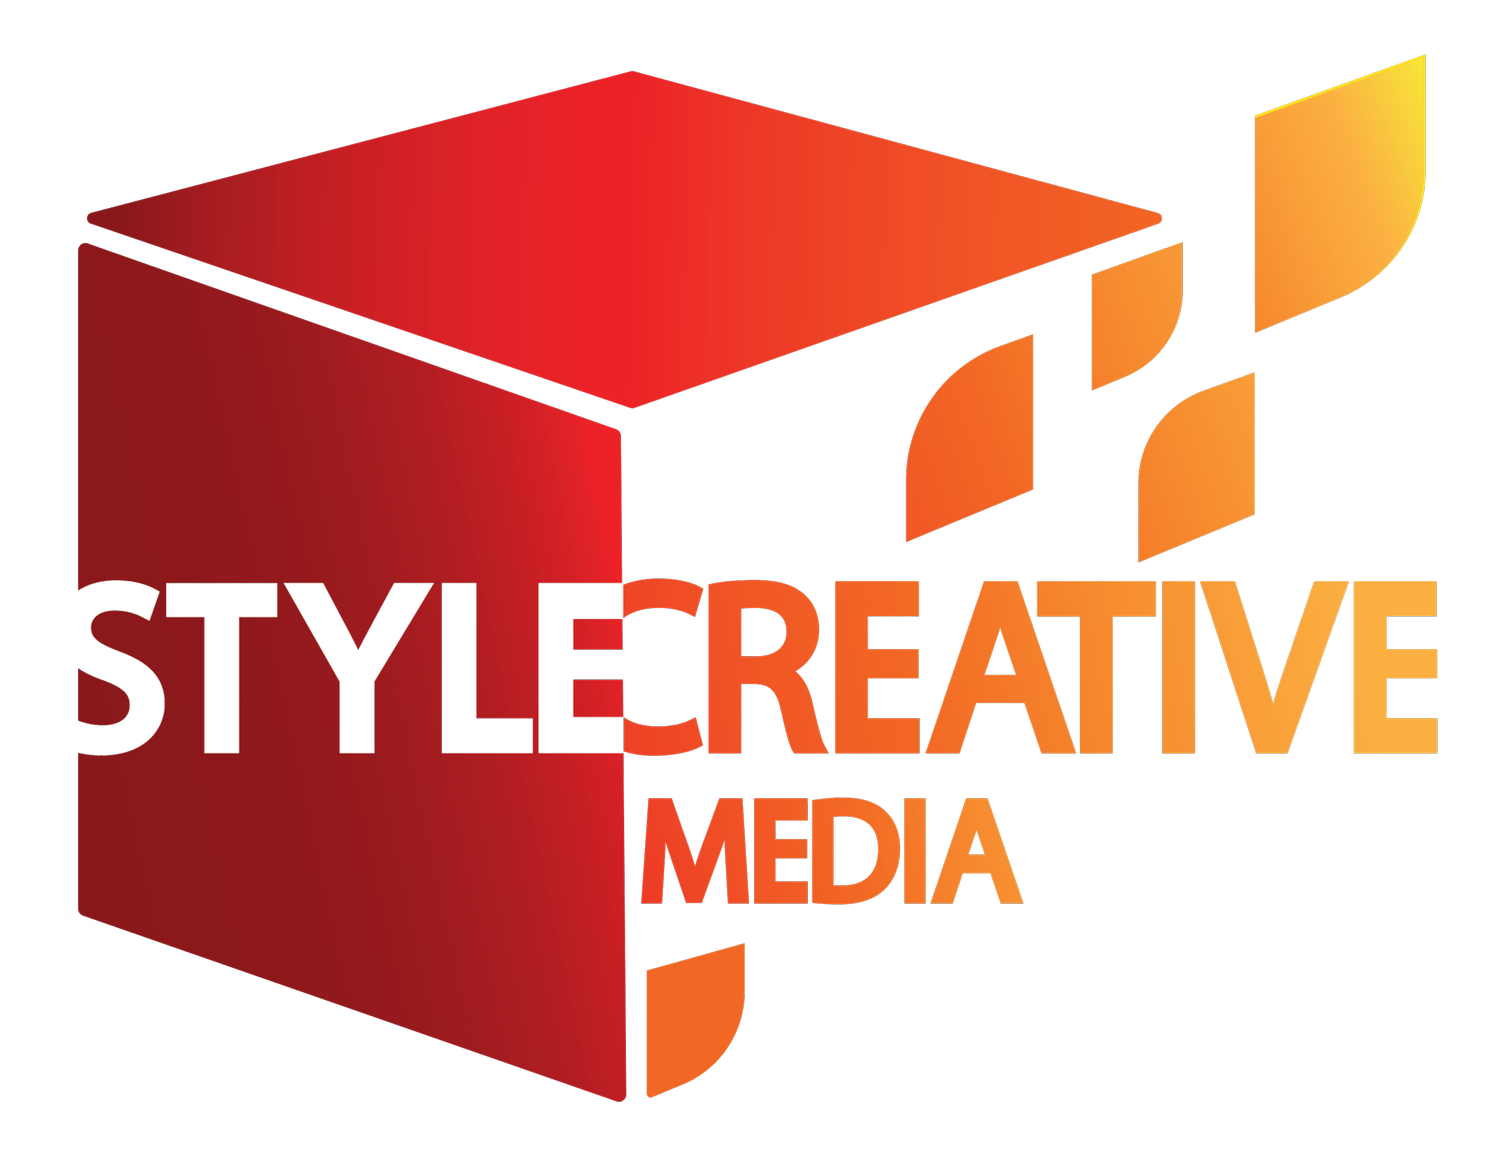 Style Creative Media